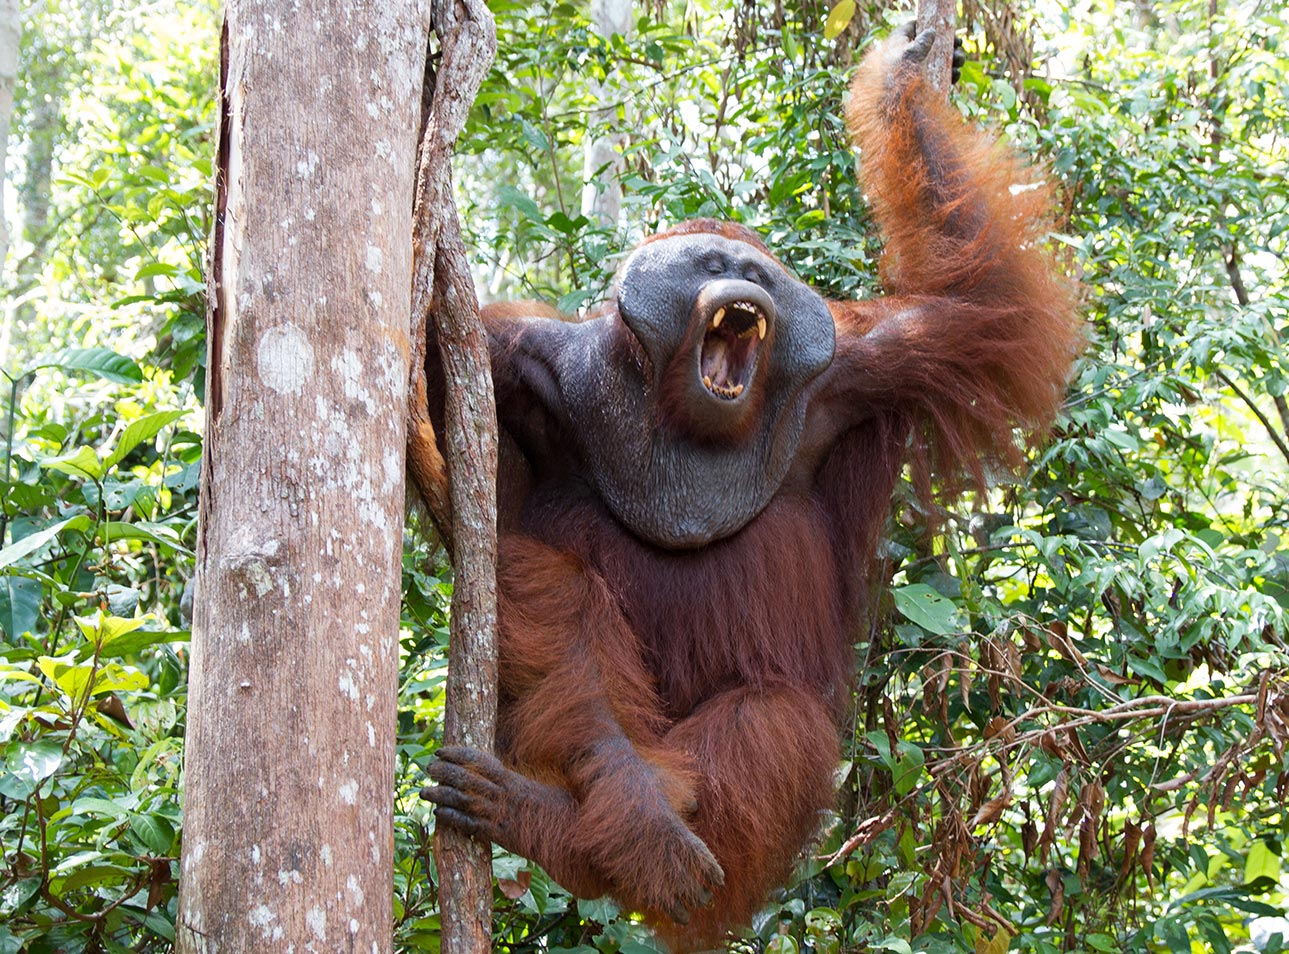 Orangutan monkey, Borneo, Tanjung Puting National Park: sitting on the tree